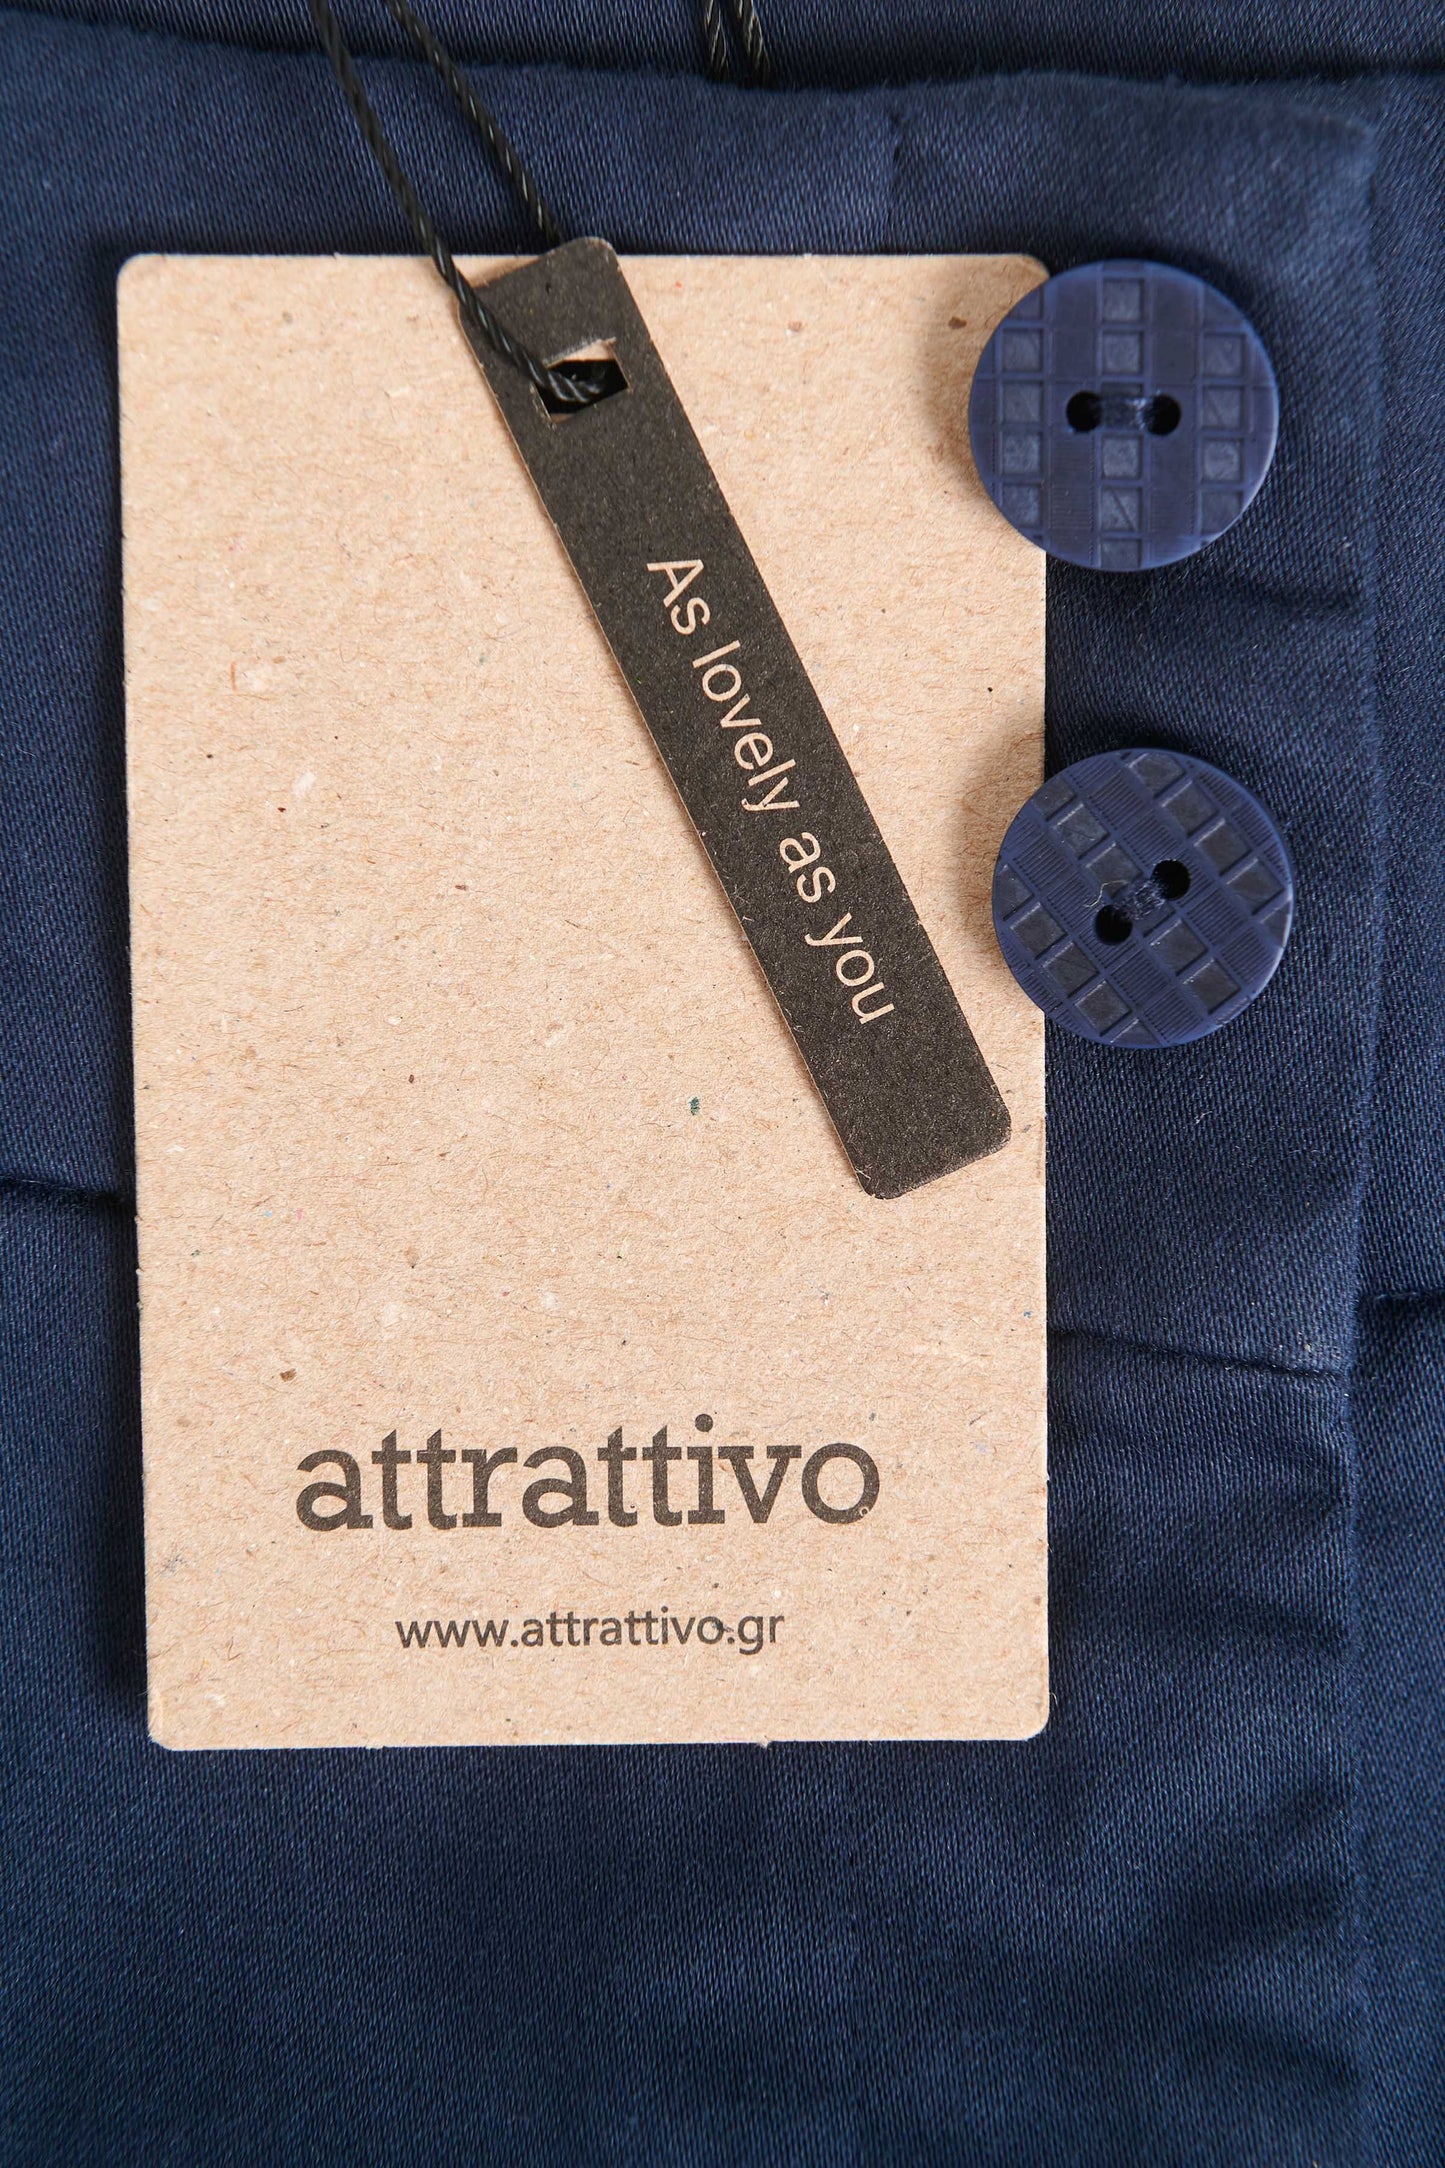 attrattivo - Pantallona blu dhe te zeza  doku